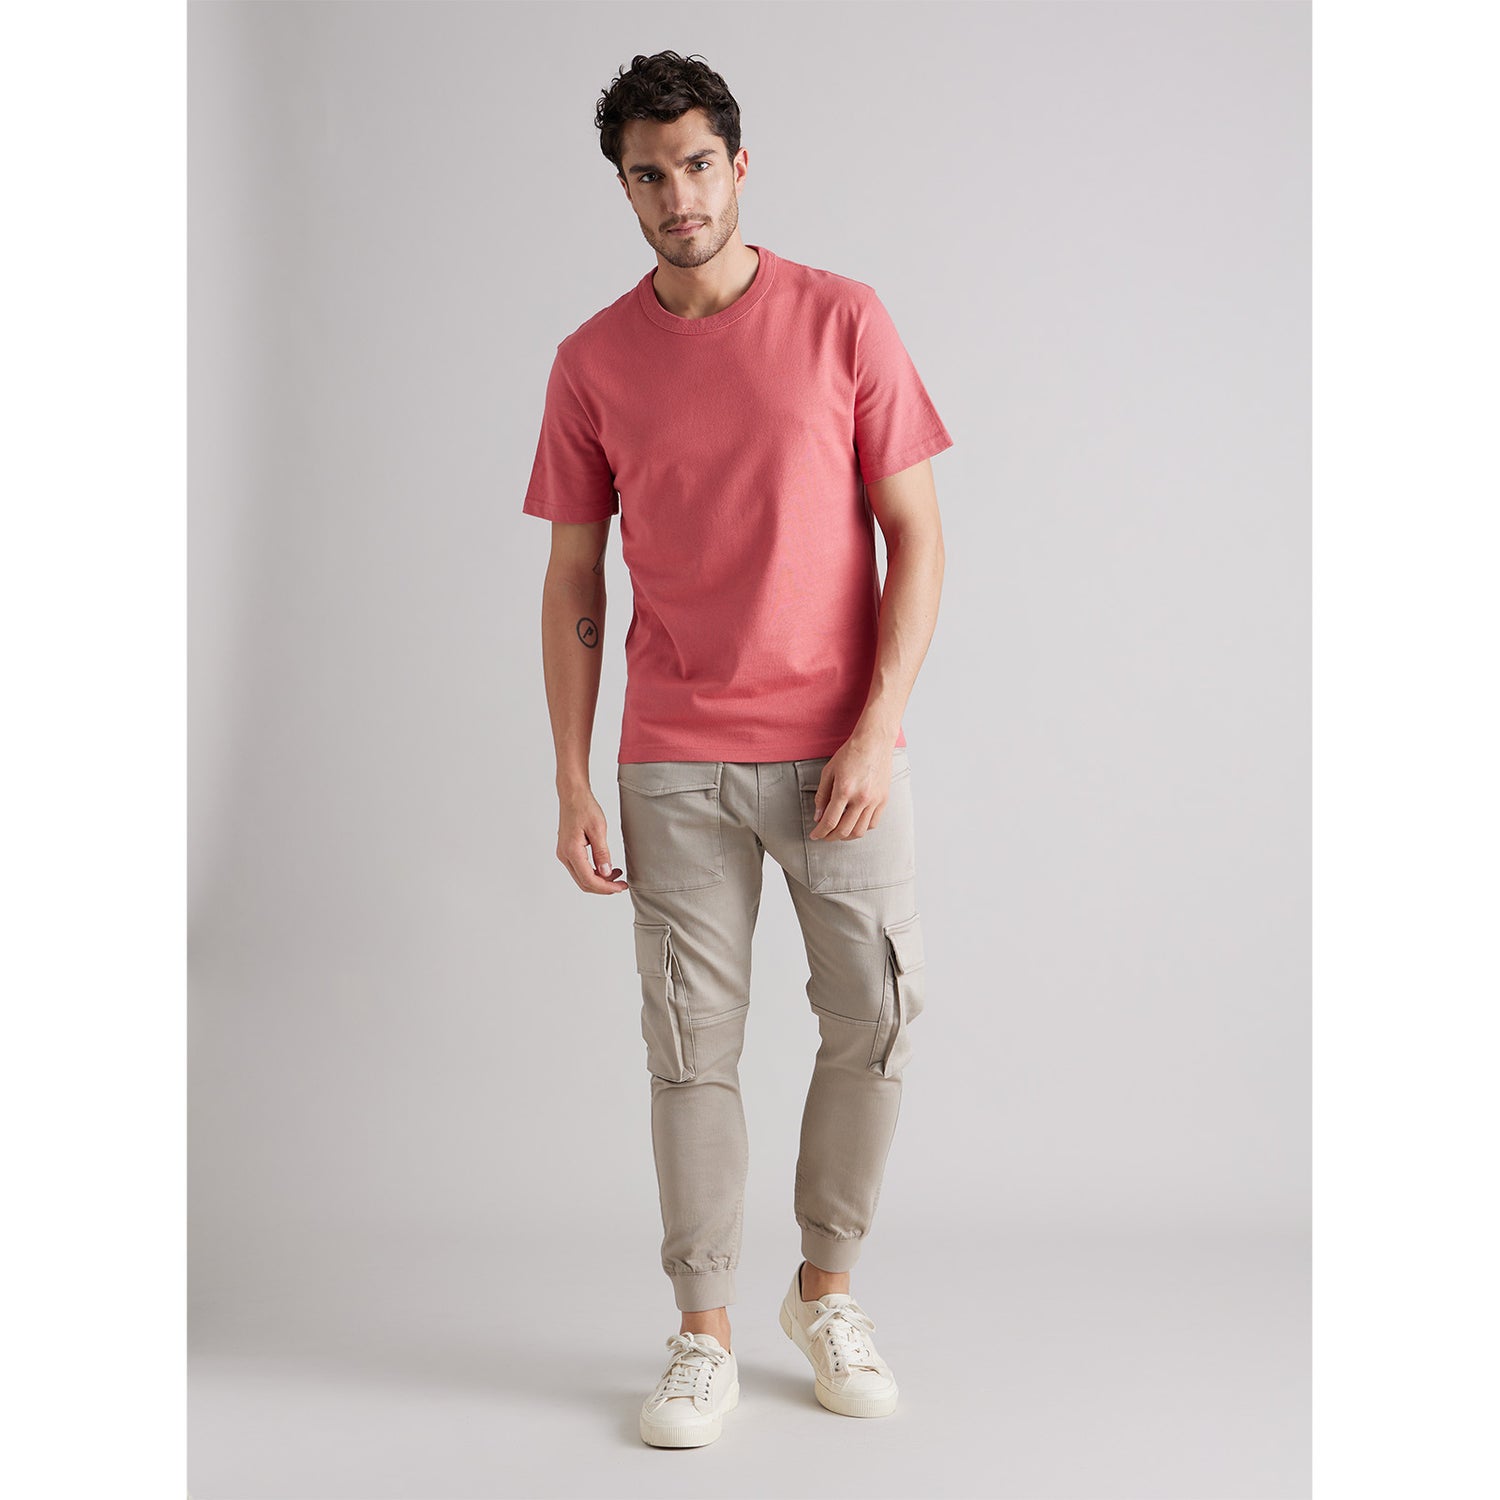 Men Solid Pink Short Sleeve T-shirt (Various Sizes)